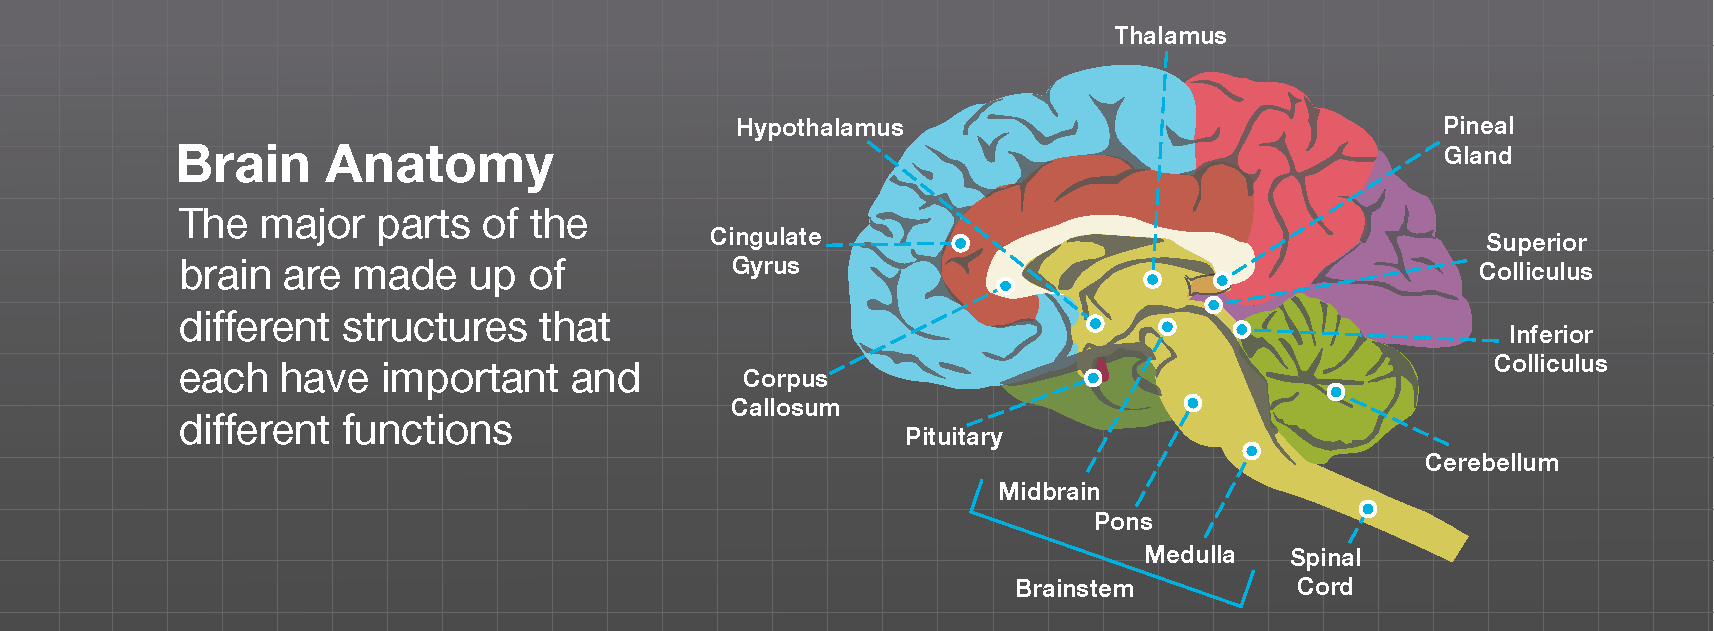 Brainstem: Anatomy, Function, and Treatment